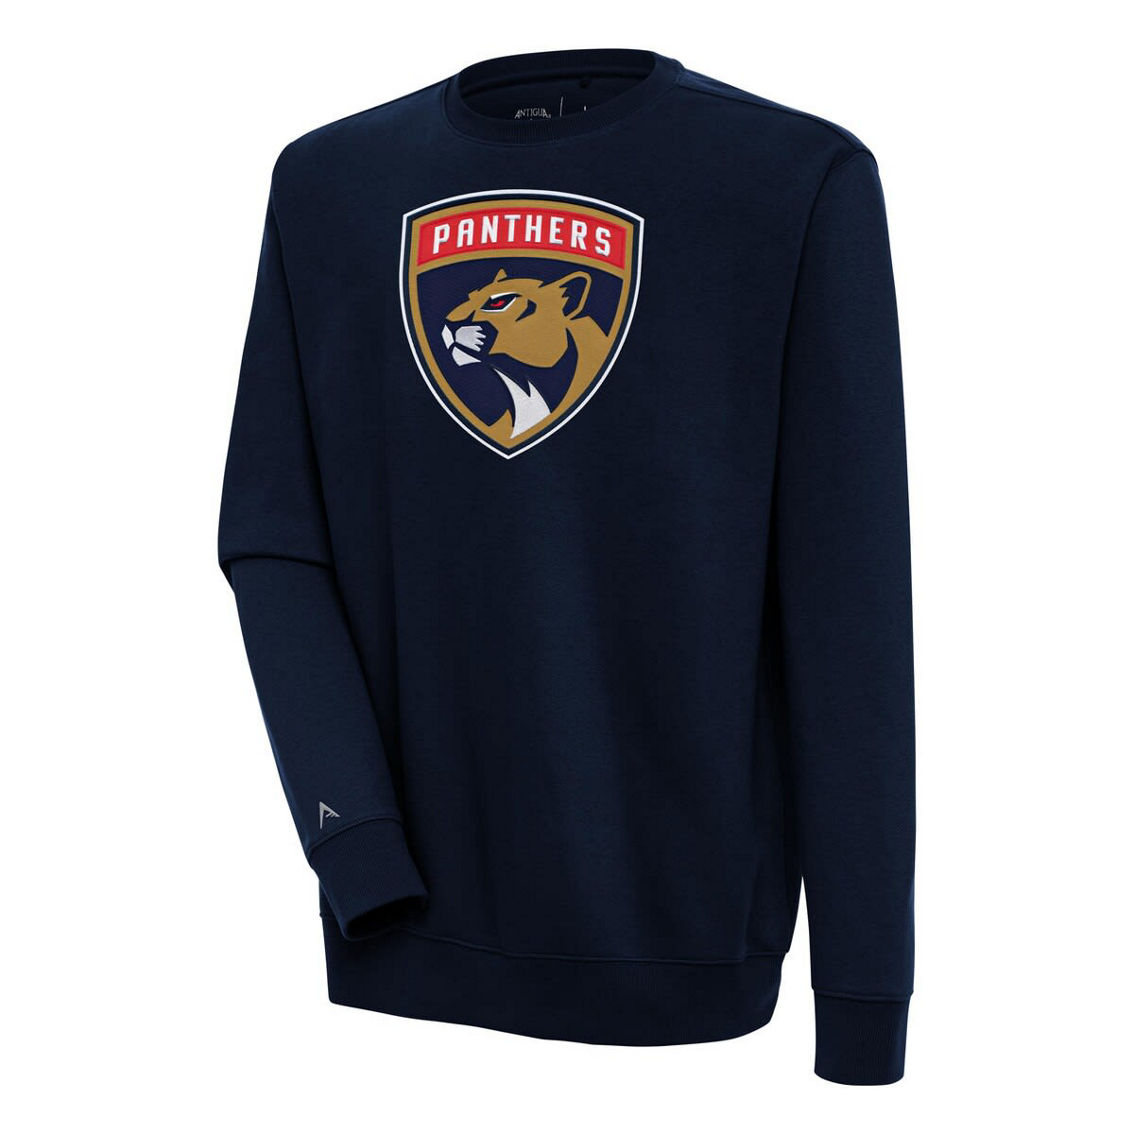 Antigua Men's Navy Florida Panthers Victory Pullover Sweatshirt - Image 2 of 2